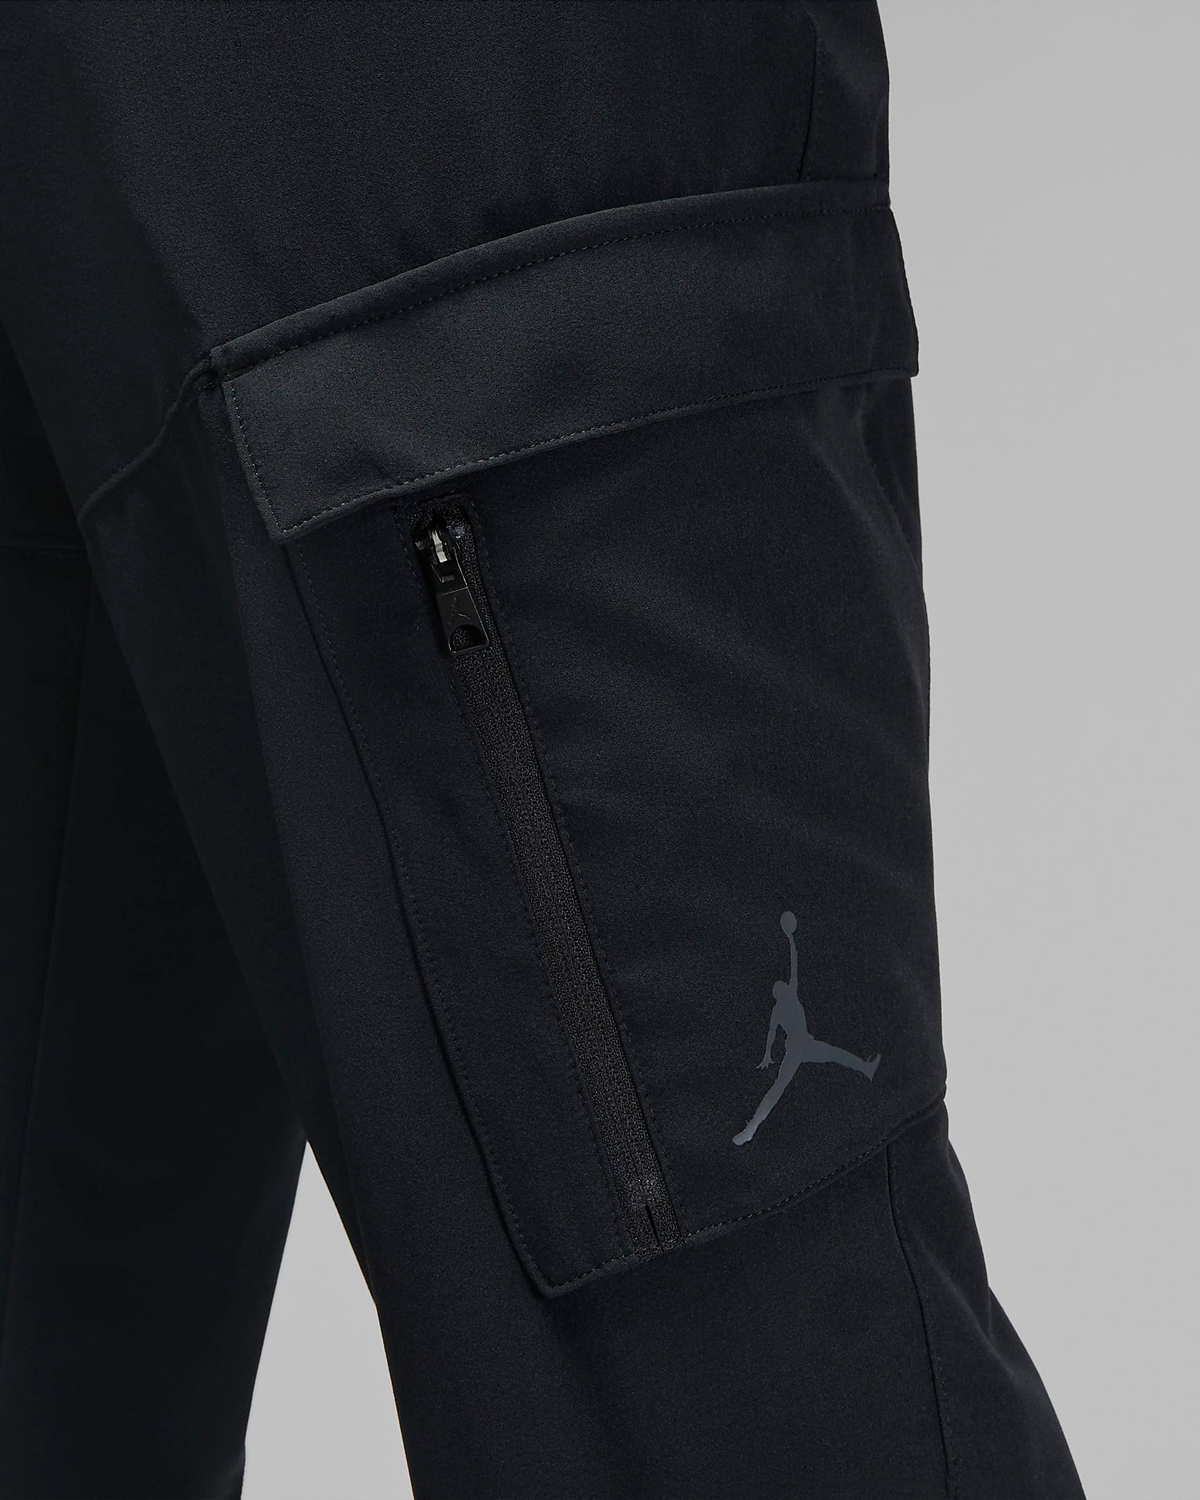 Jordan-Golf-Pants-Black-2